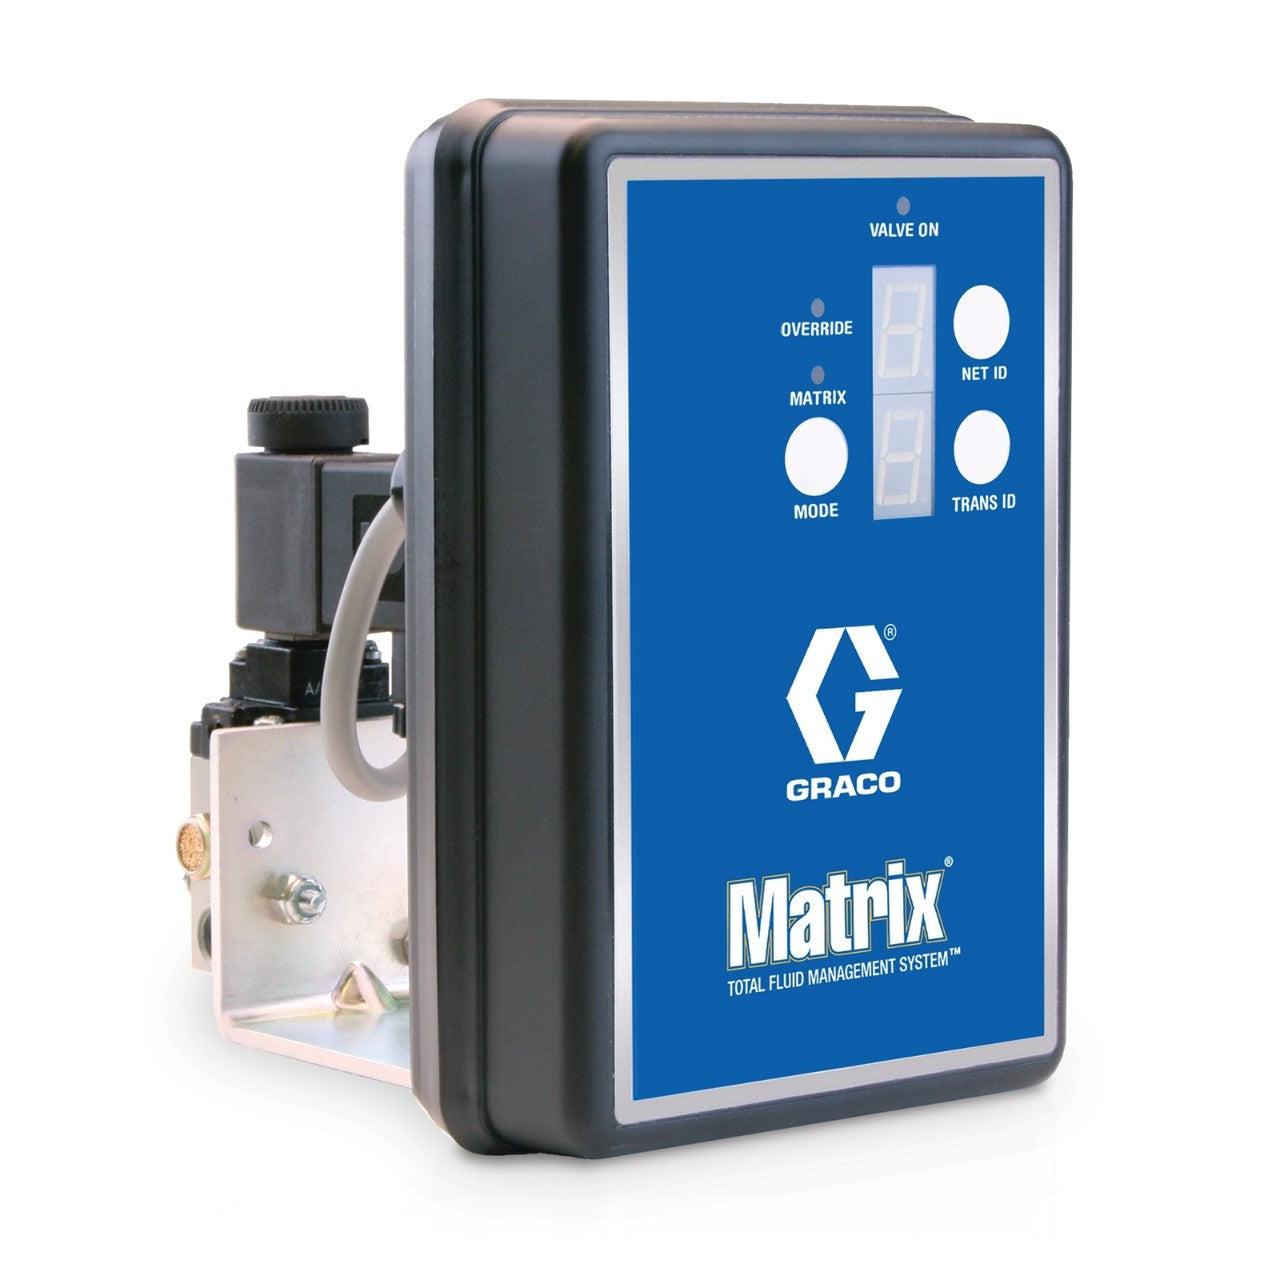 Pump Air Control for Matrix Systems